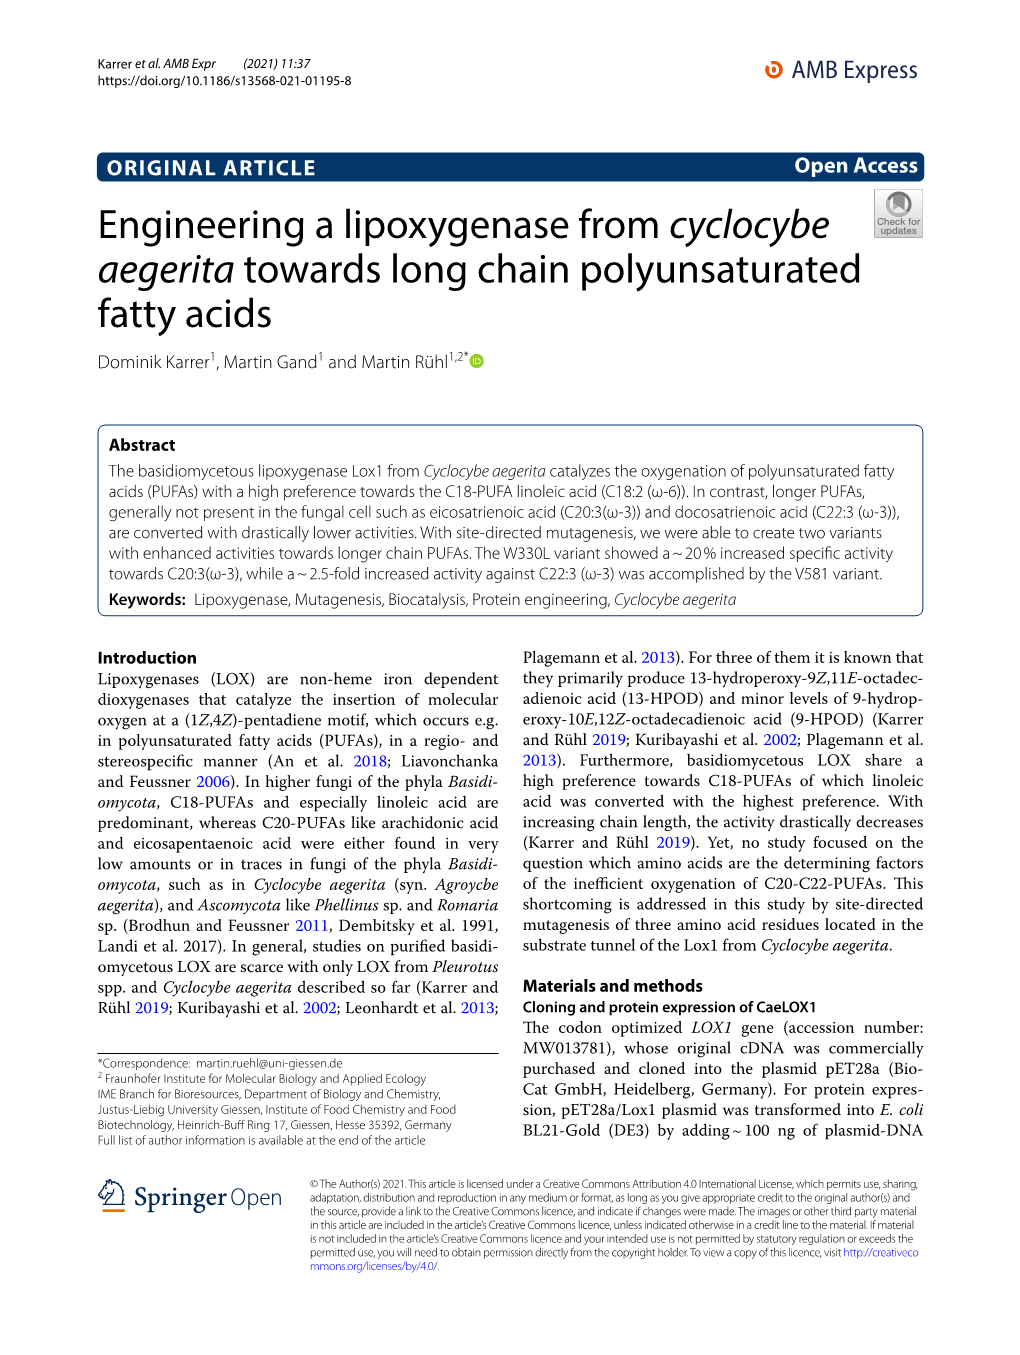 Engineering a Lipoxygenase from Cyclocybe Aegerita Towards Long Chain Polyunsaturated Fatty Acids Dominik Karrer1, Martin Gand1 and Martin Rühl1,2*